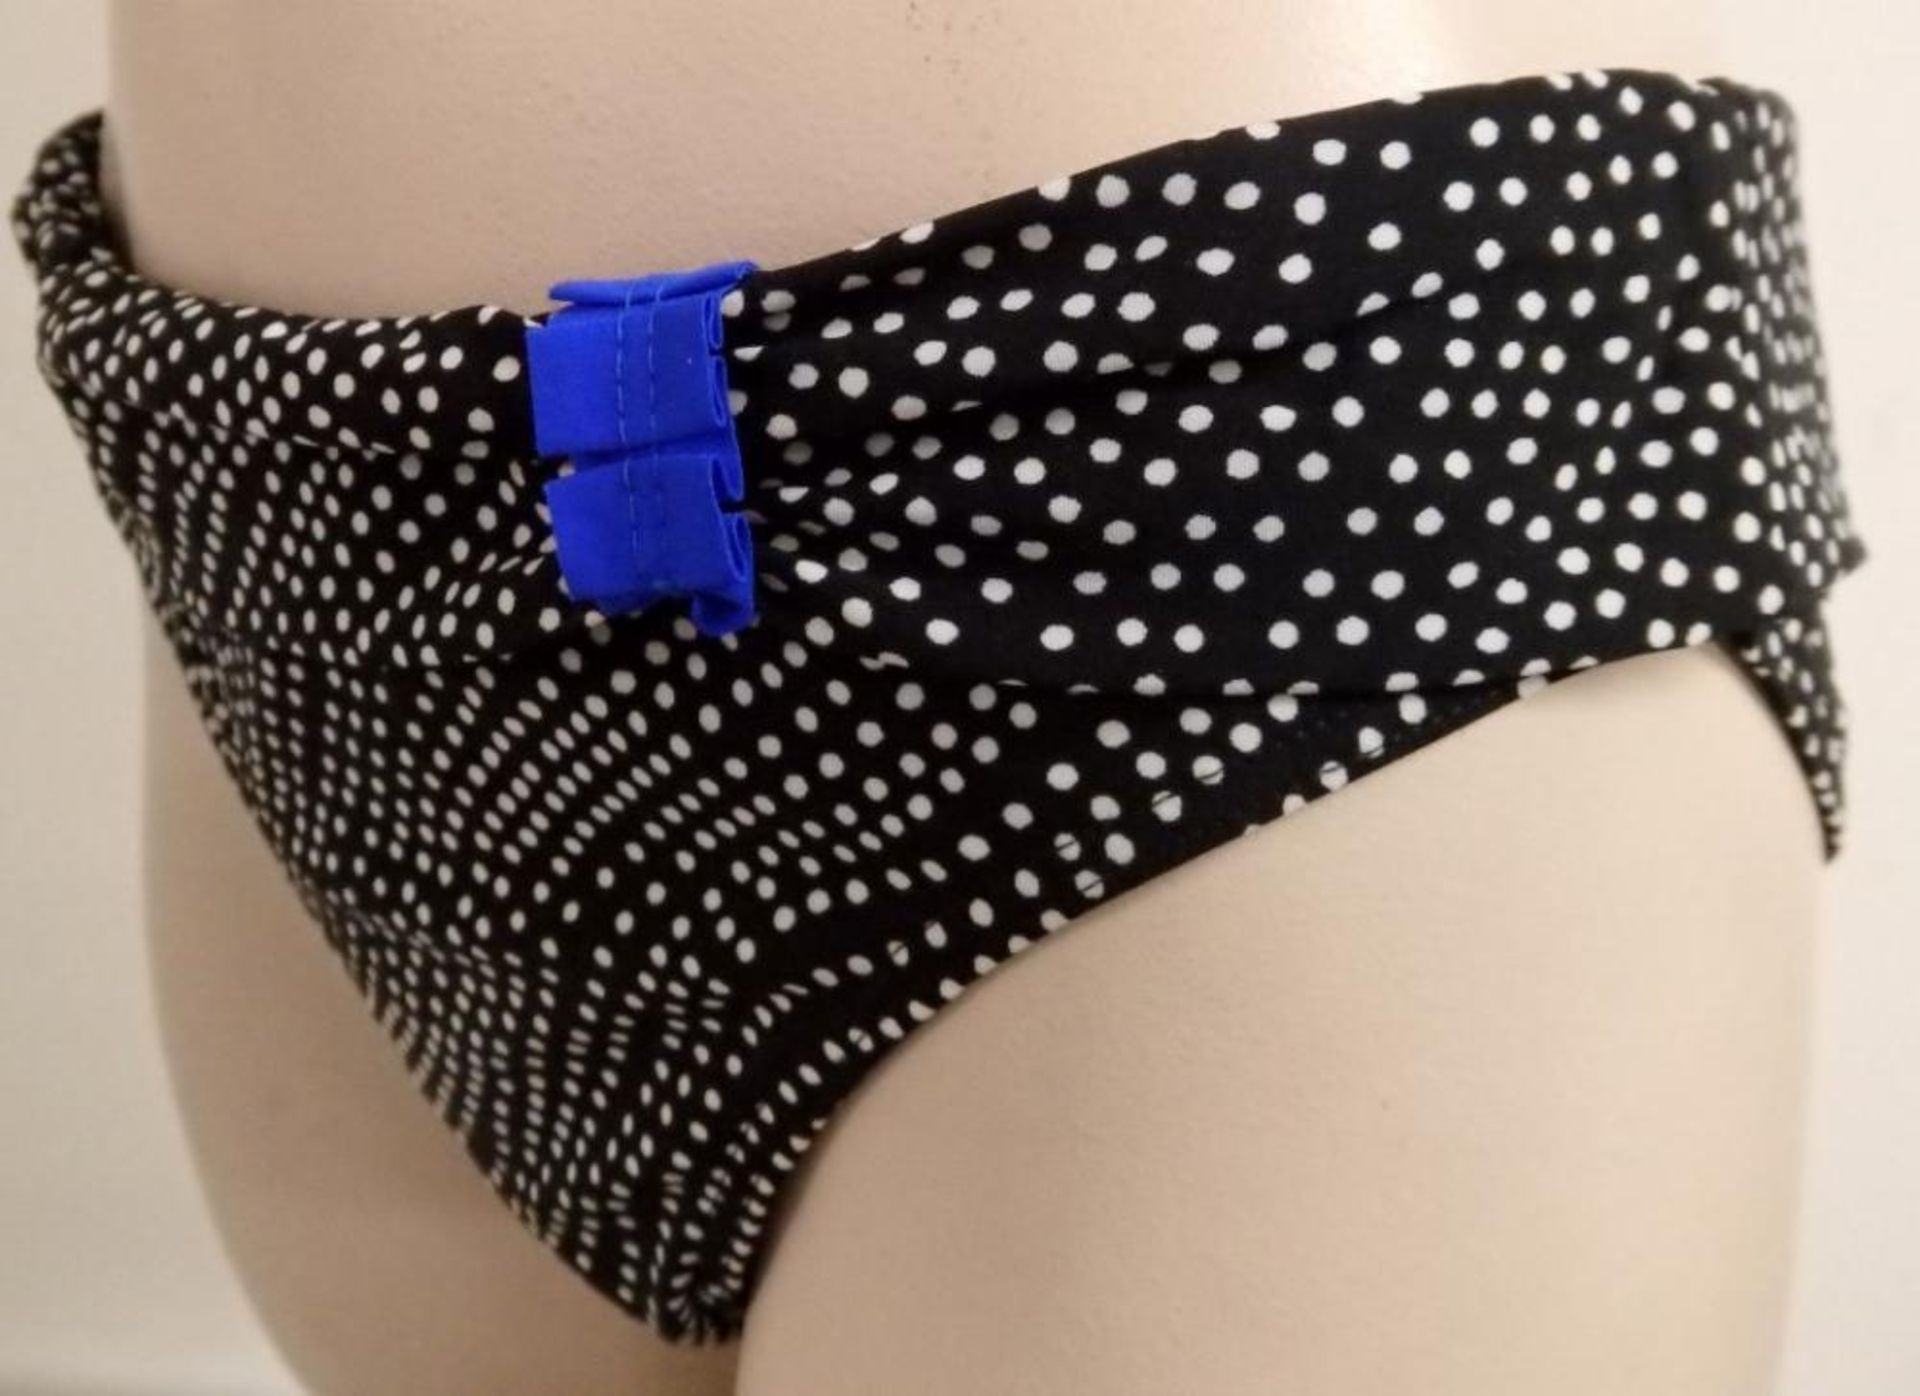 1 x Rasurel - Black Polka dot with royal blue trim &frill Tobago Bikini - B21068 - Size 2C - UK 32 - - Image 2 of 10